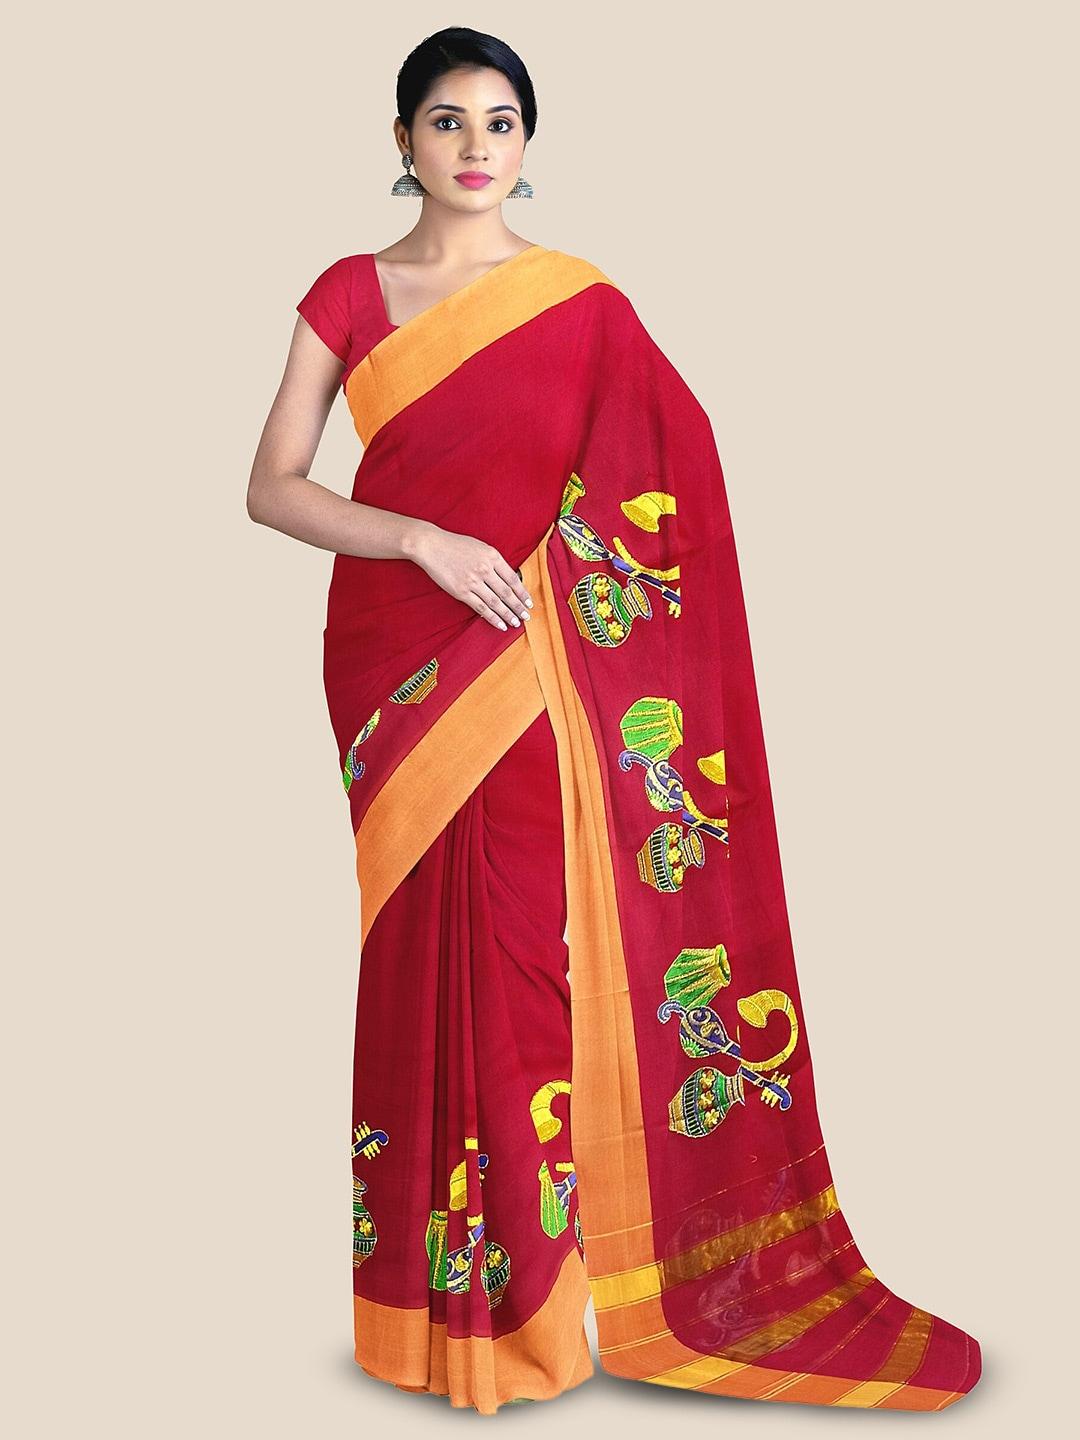 The Chennai Silks Embroidered Sambalpuri Saree